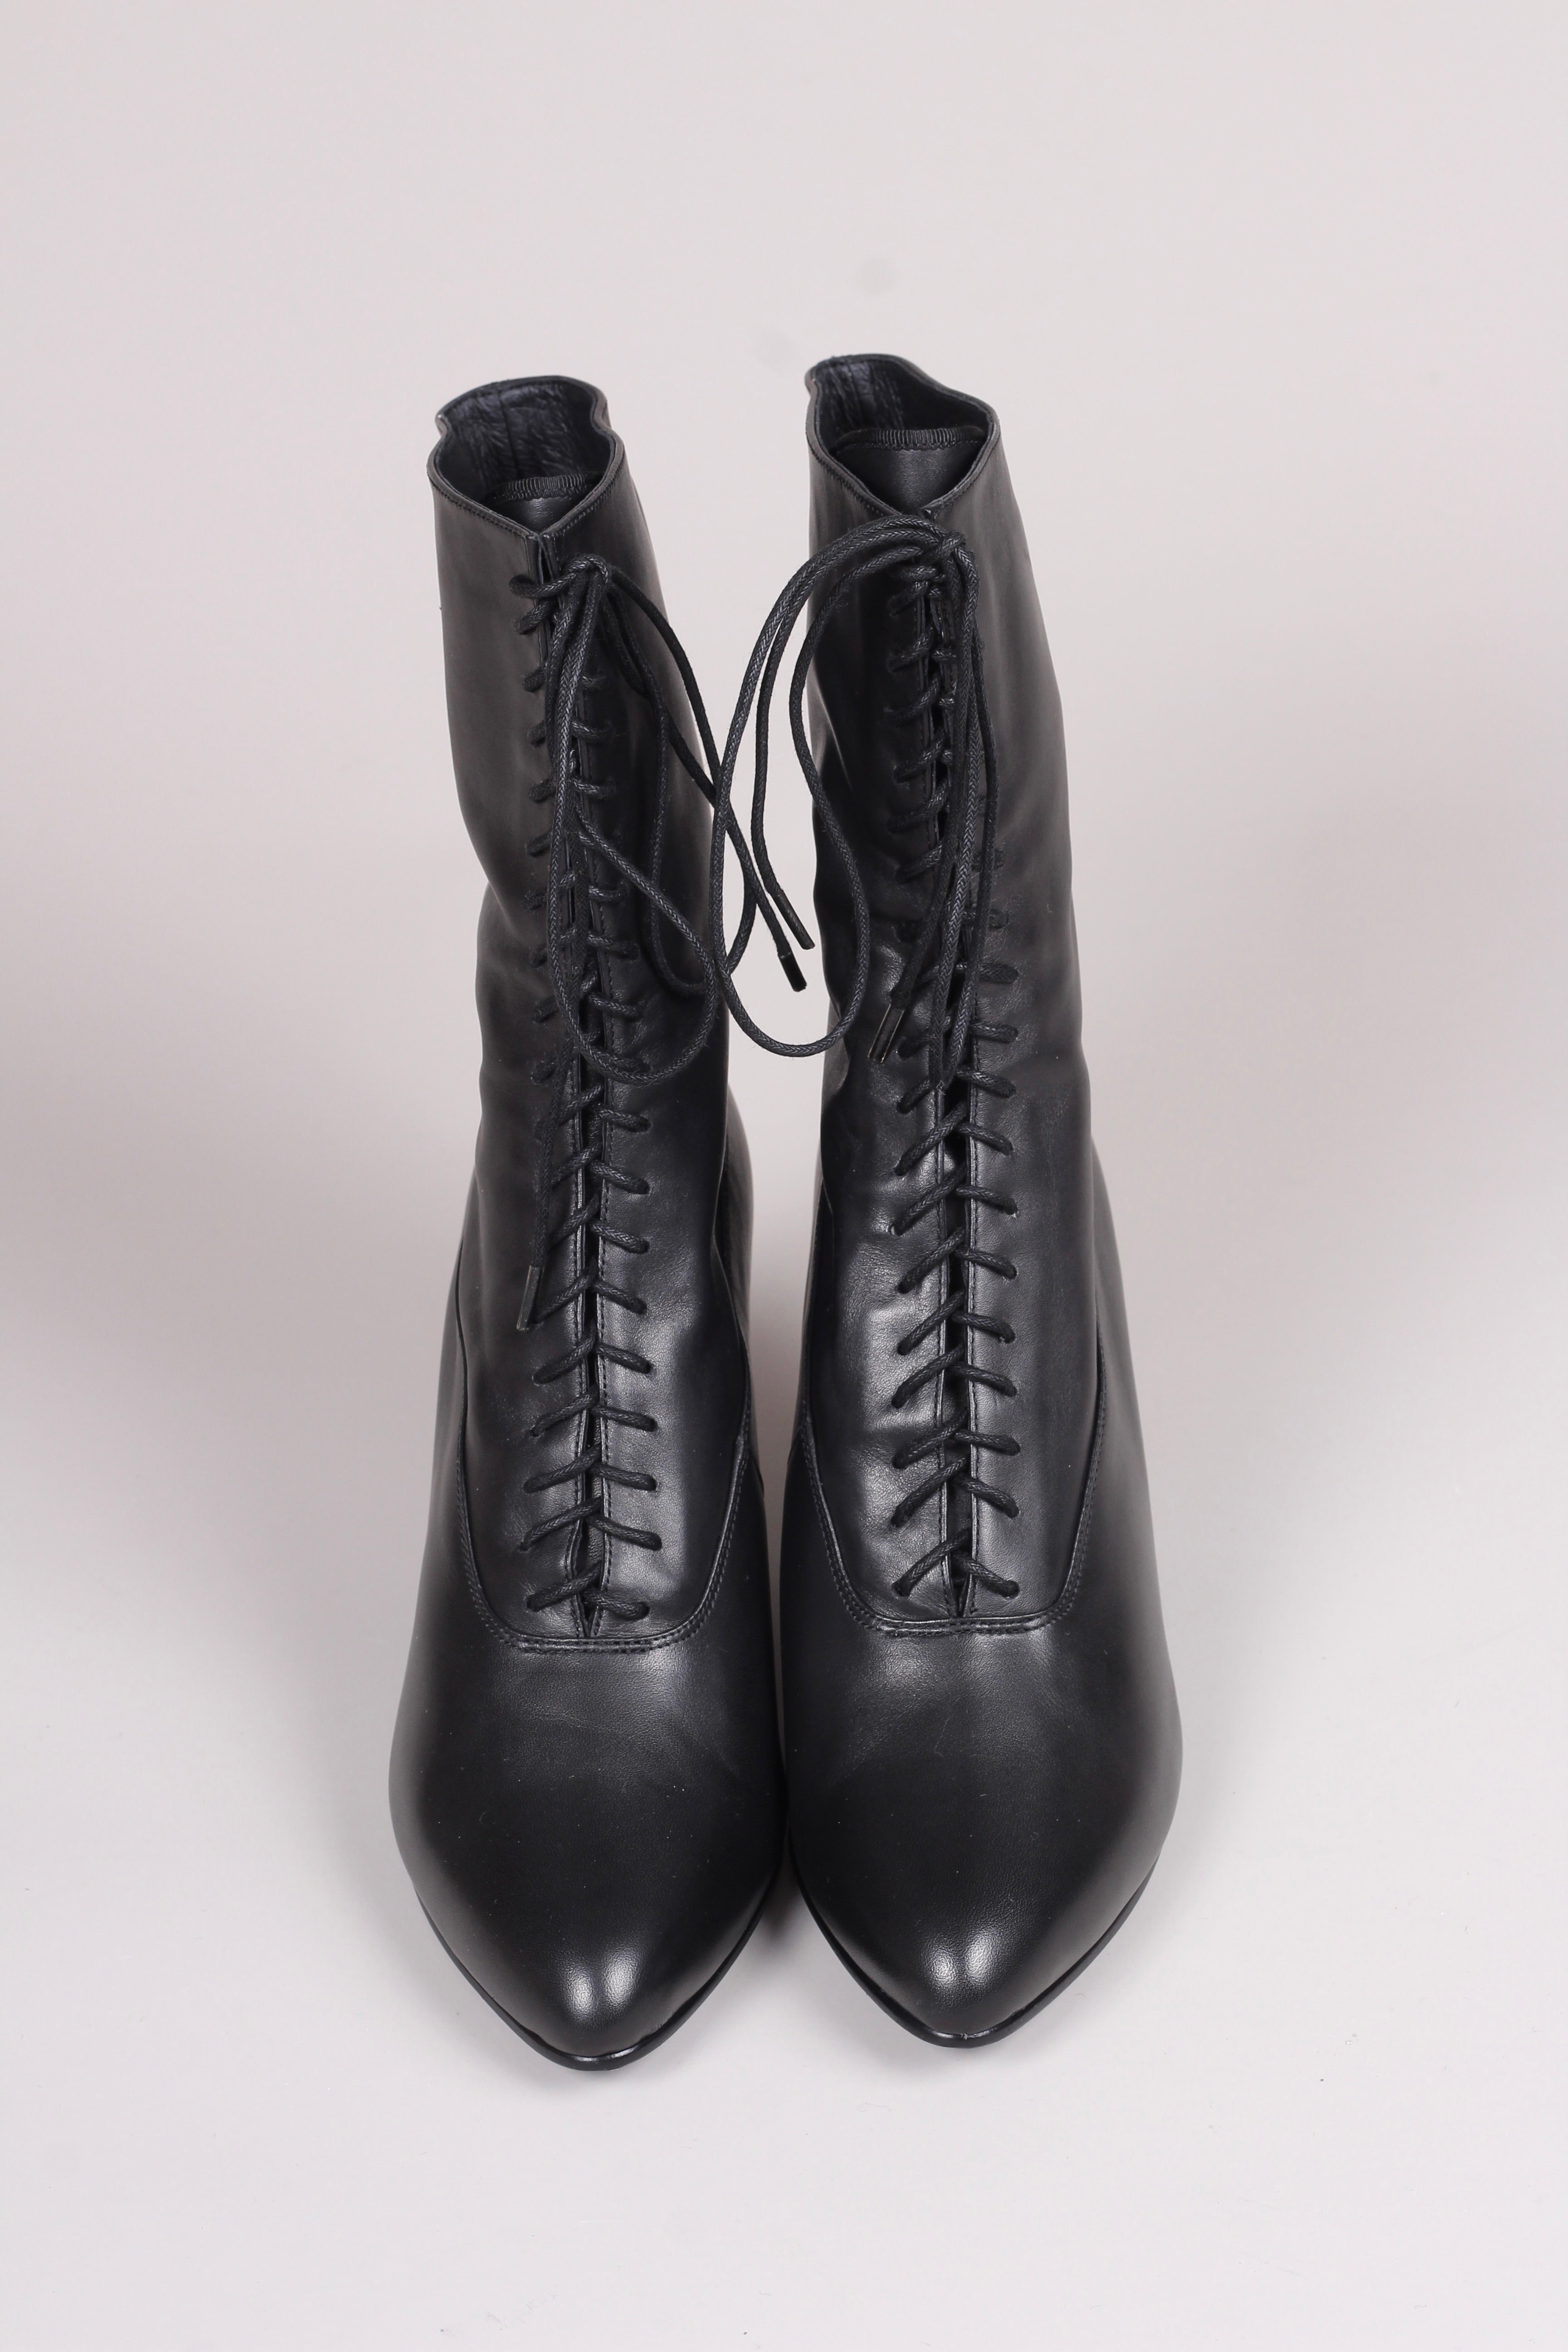 Feminine soft Edwardian boot with pompadour heel, 1900-1915 - Black ...